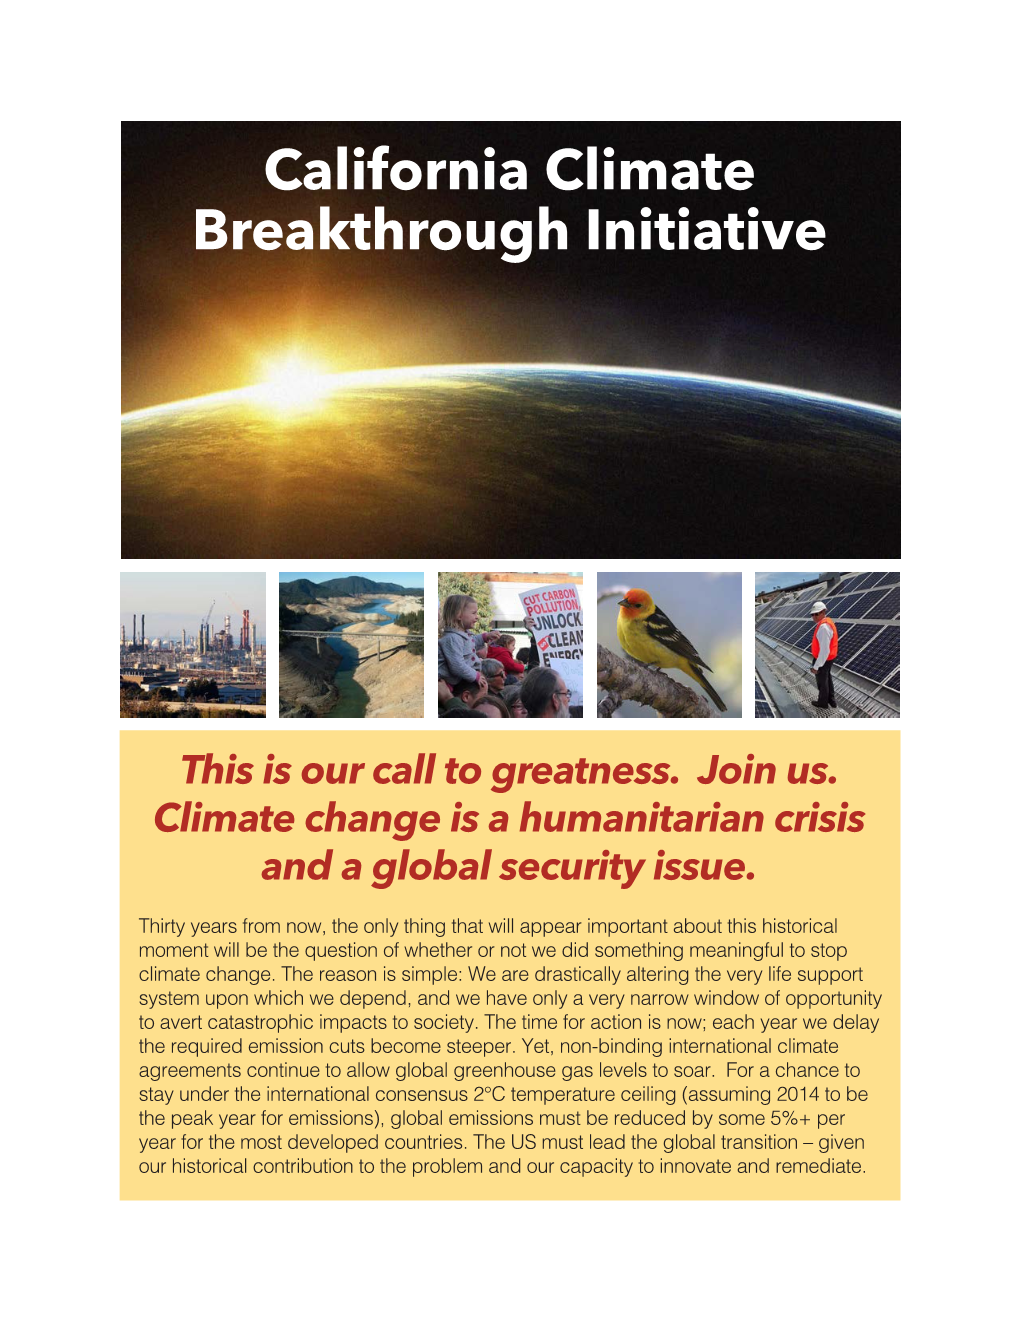 California Climate Breakthrough Initiative